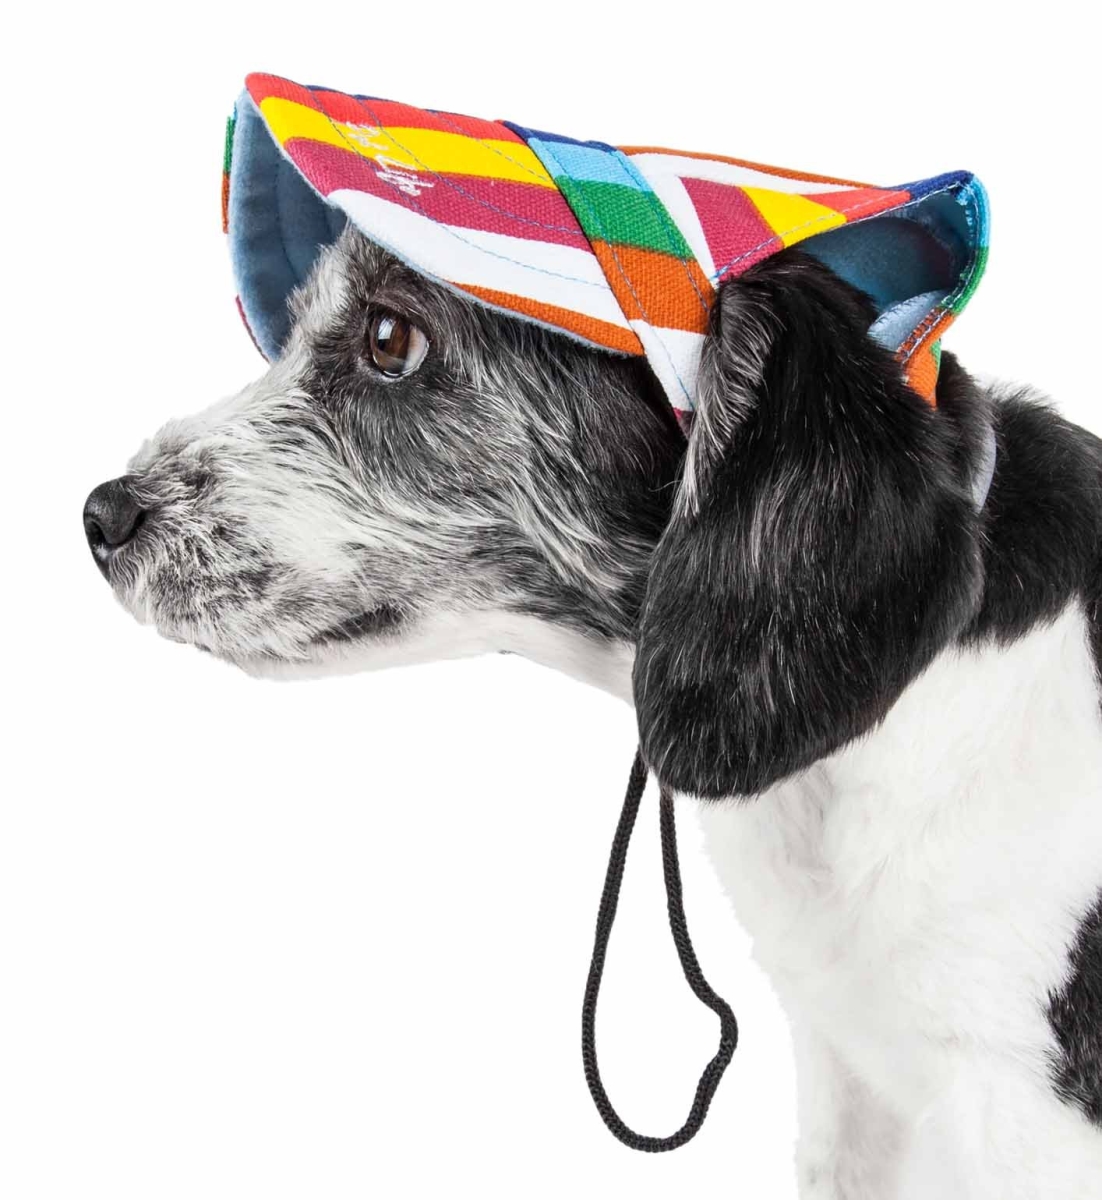 Picture of Pet Life HT1RBLG Colorfur Floral UV Protectant Adjustable Fashion Dog Hat - Rainbow, Large